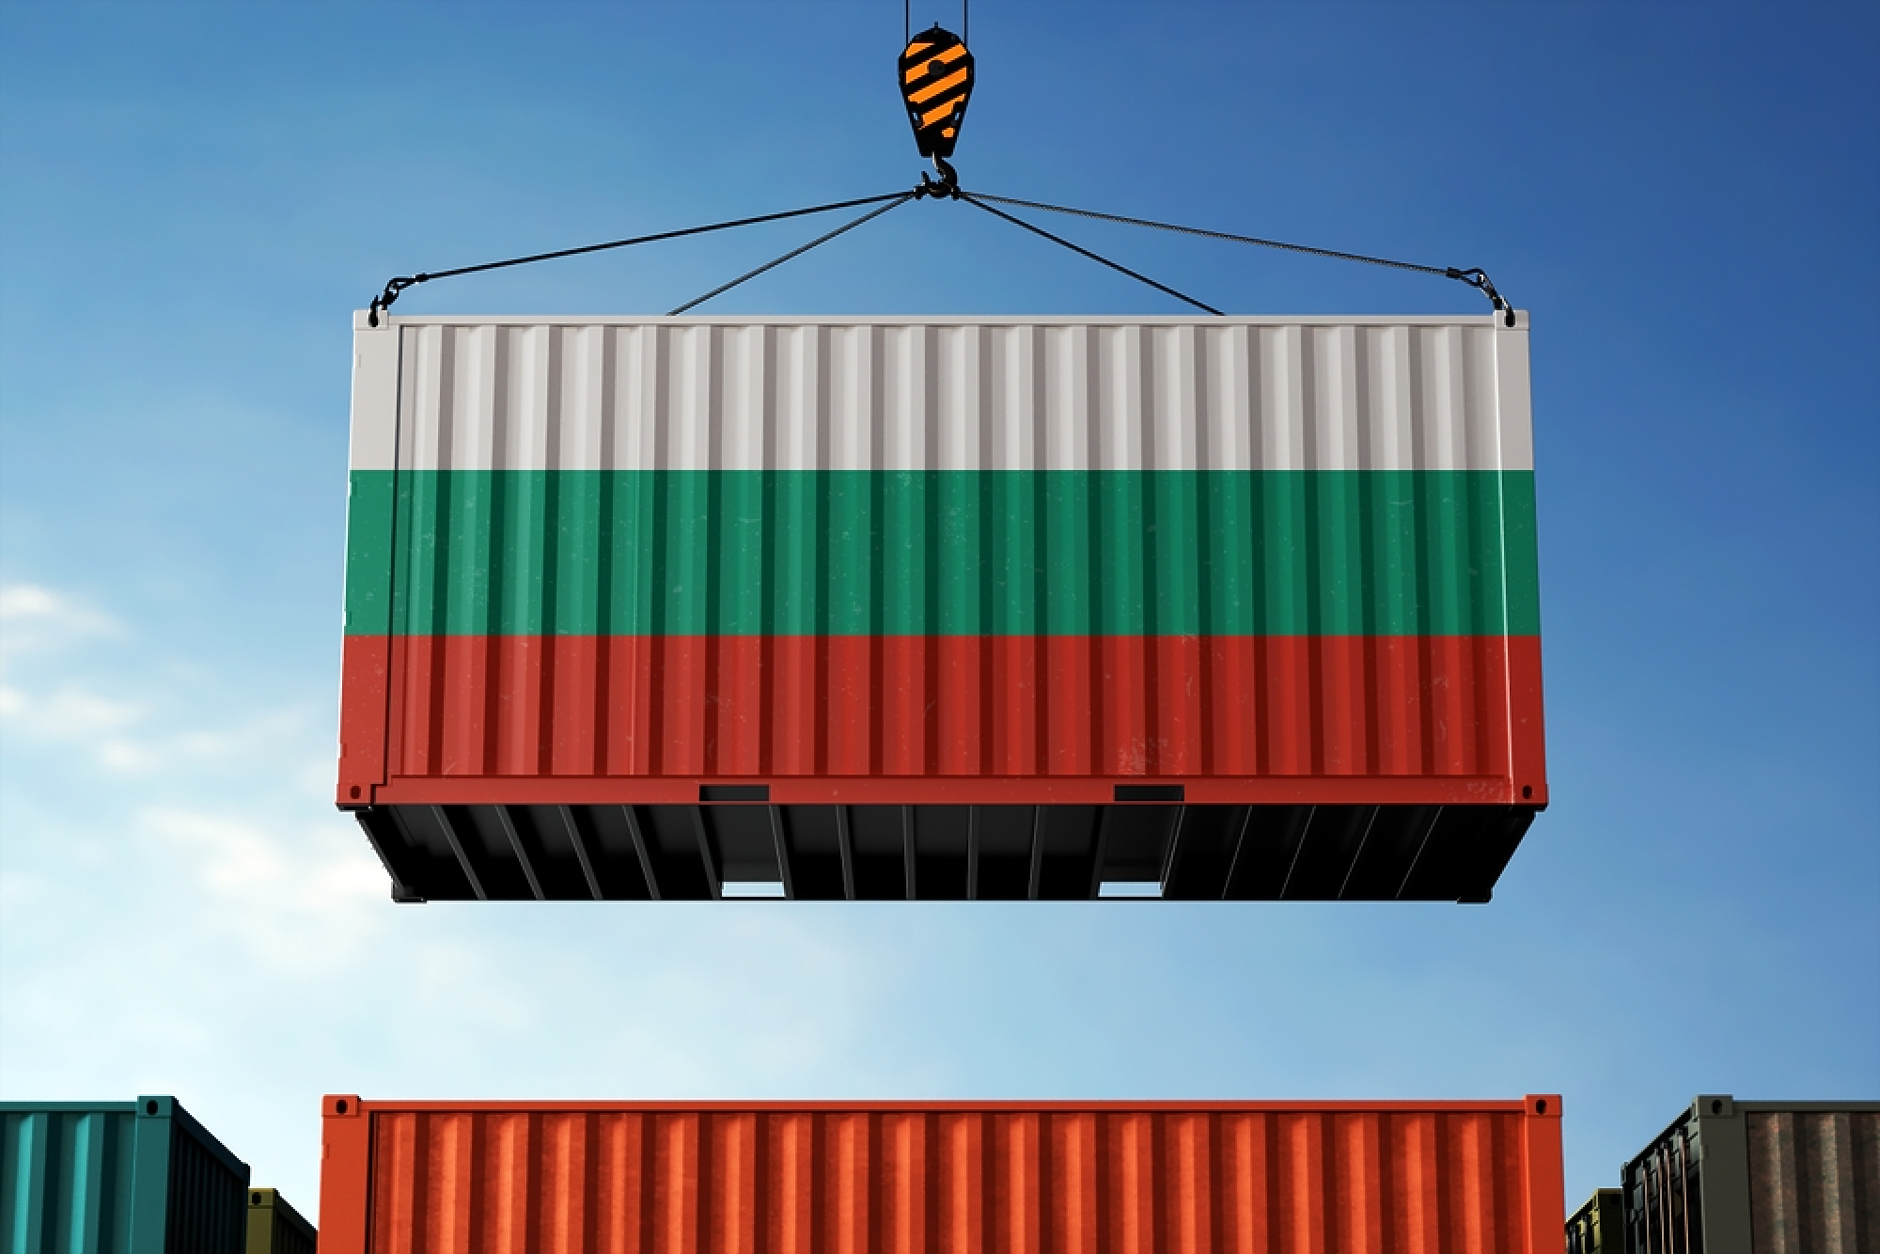 НСИ отчете близо 14% спад на износа на български стоки за ЕС 